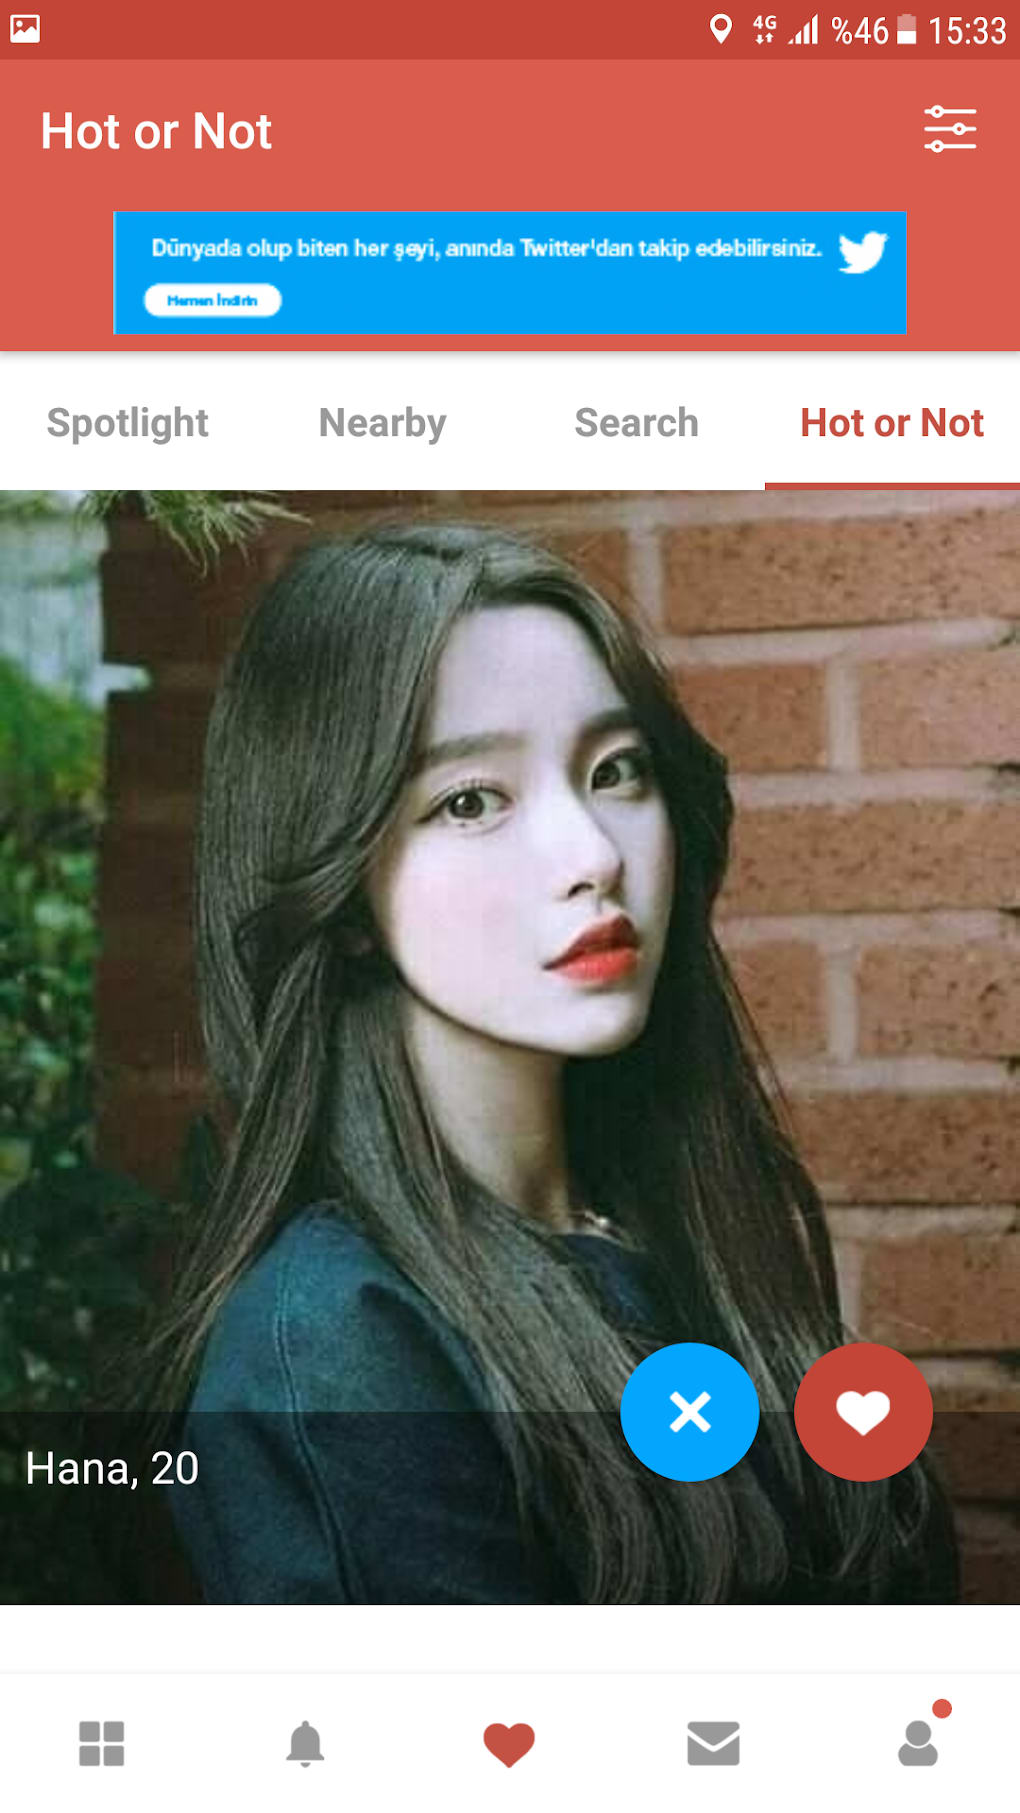 dating apps in korea reddit